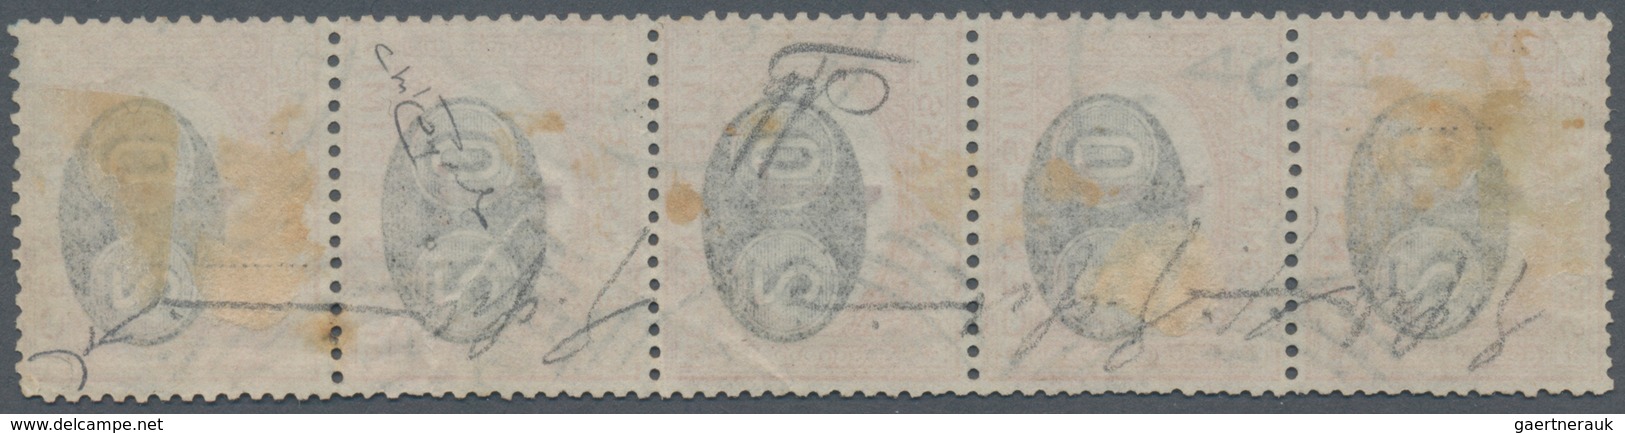 Italien - Portomarken: 1890, 20 Cent. On 1 Cent Orange/carmine Stripe Of Five Stamped, All Items In - Postage Due